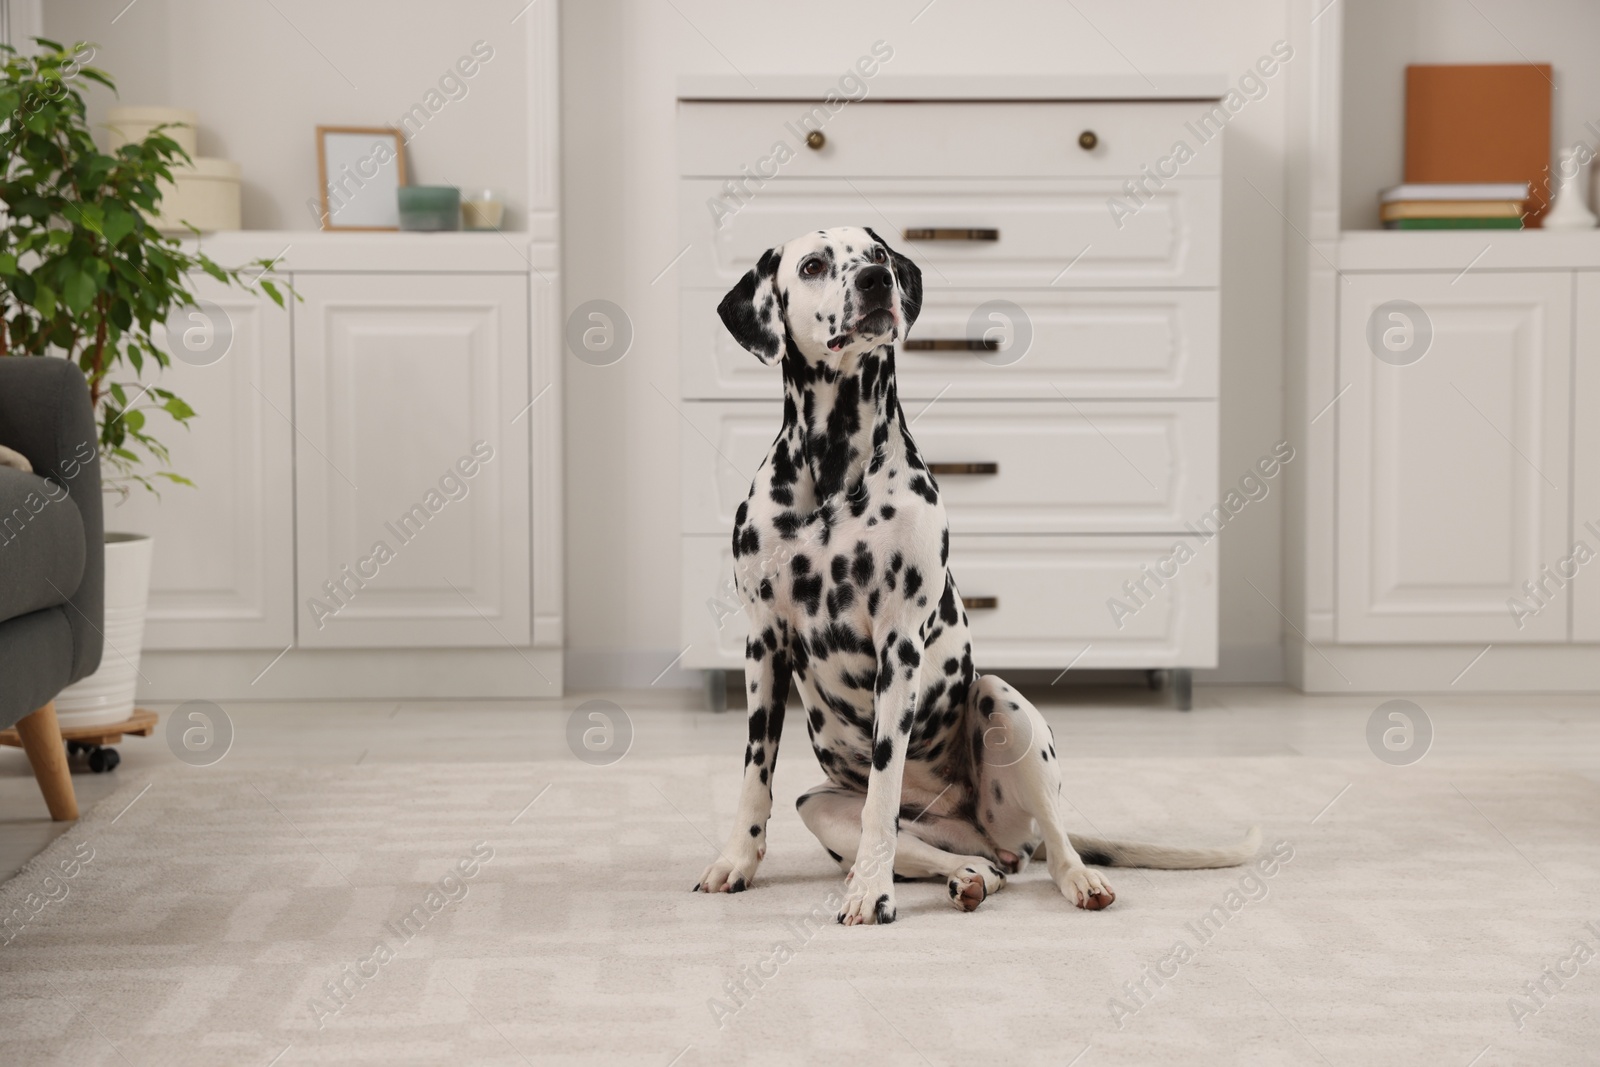 Photo of Adorable Dalmatian dog sitting on rug indoors. Lovely pet